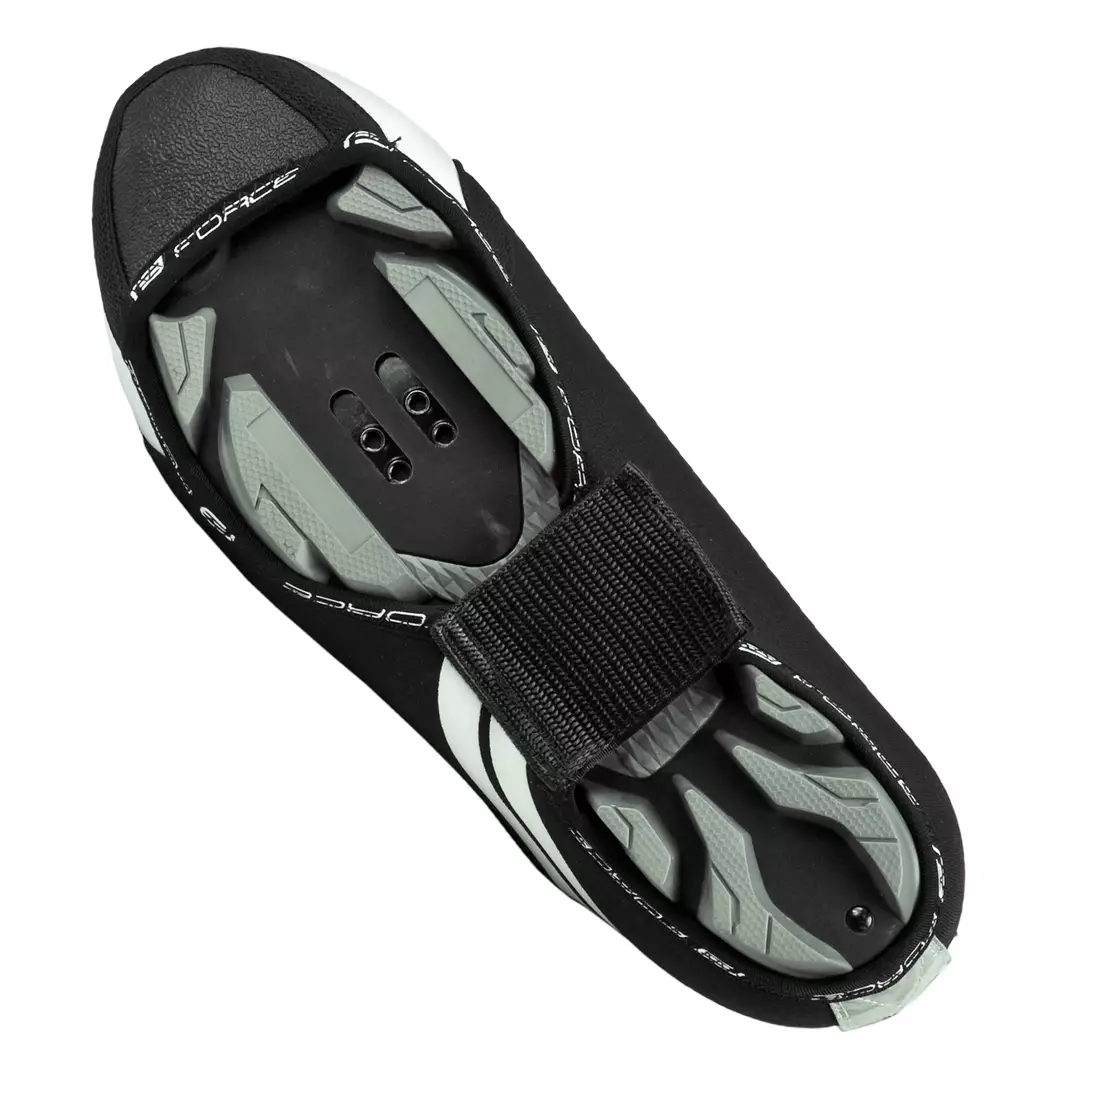 FORCE HOT - 90598 - MTB shoe covers, neopren 4mm